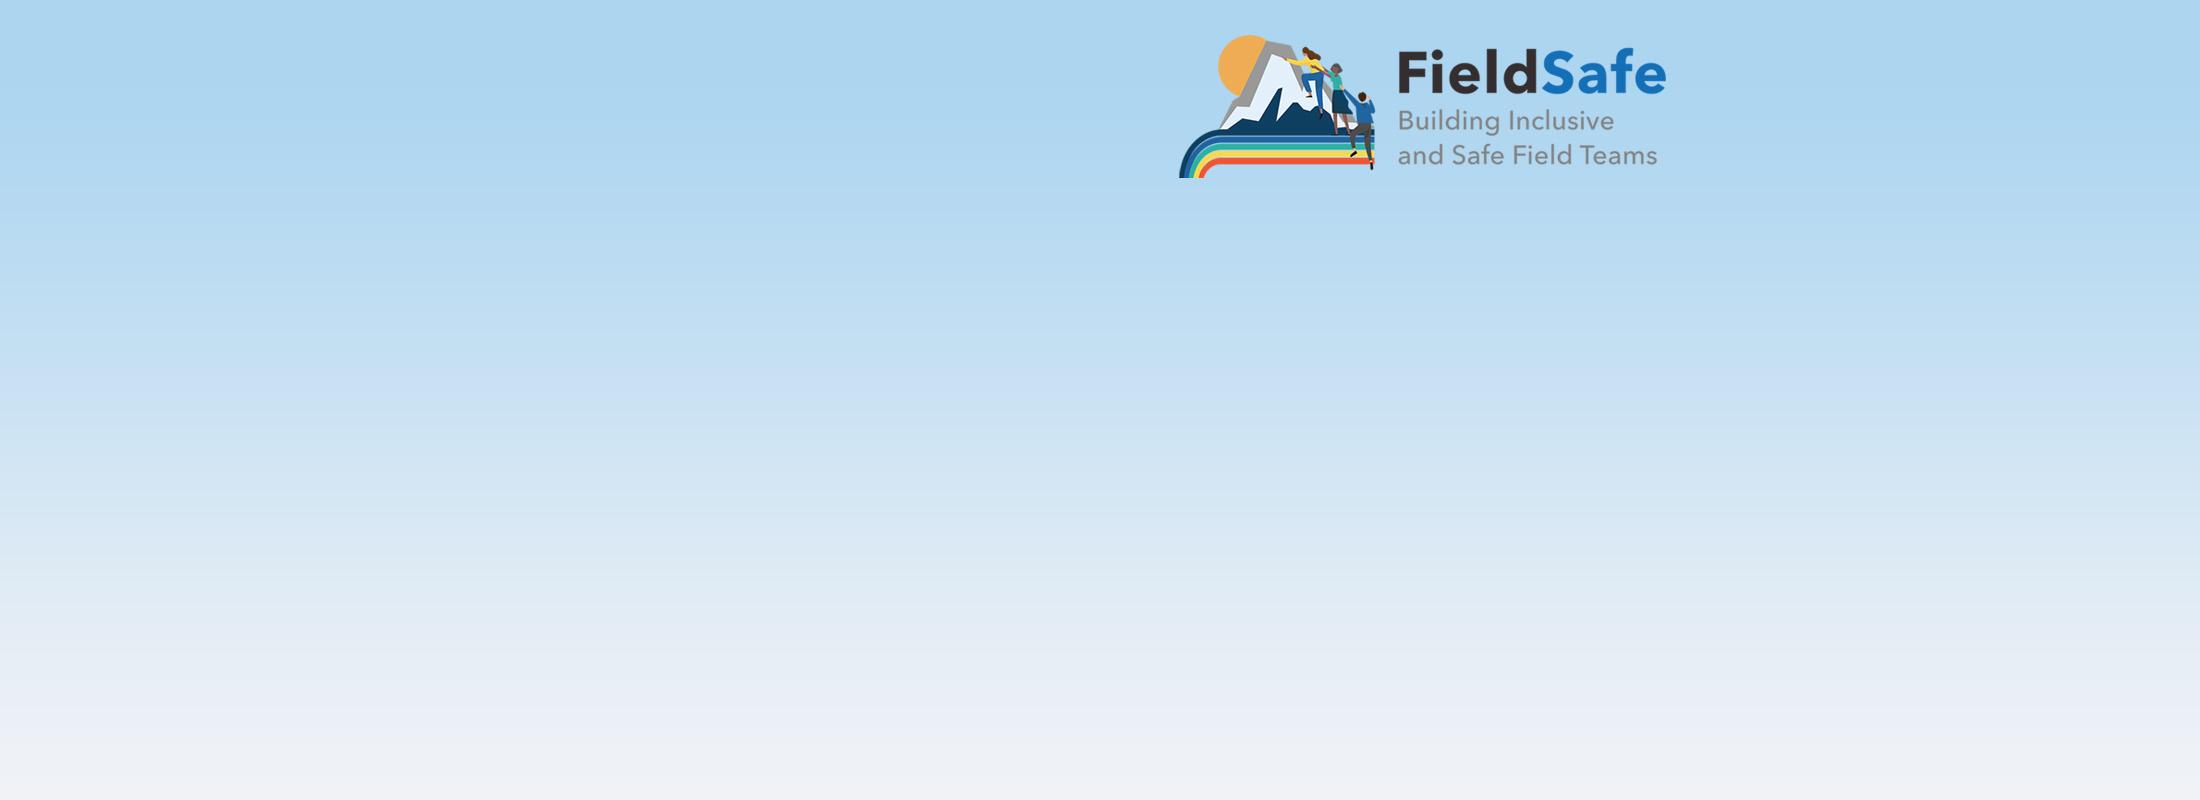 FieldSafe logo